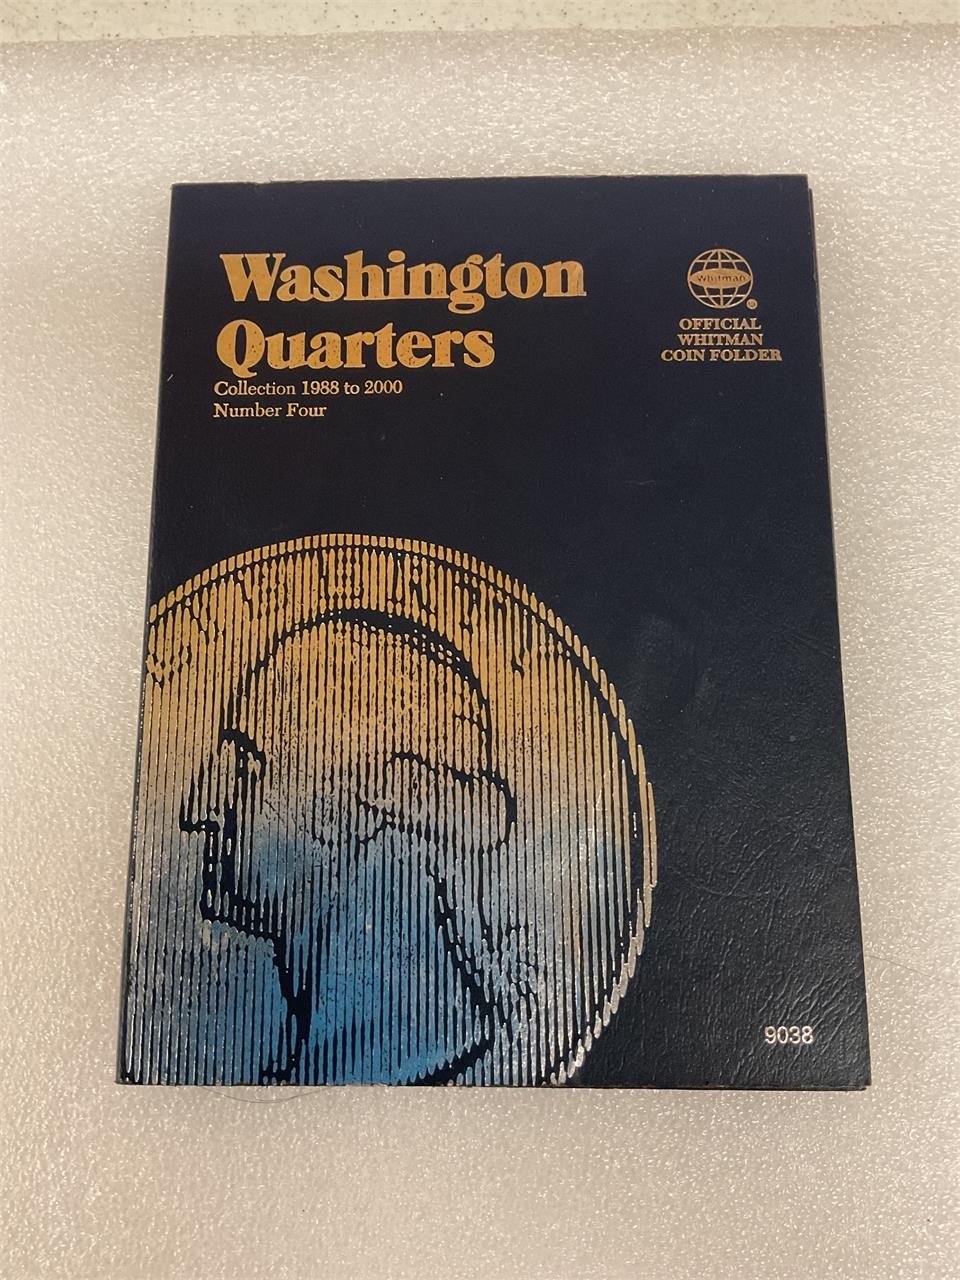 Washington quarter album,incomplete